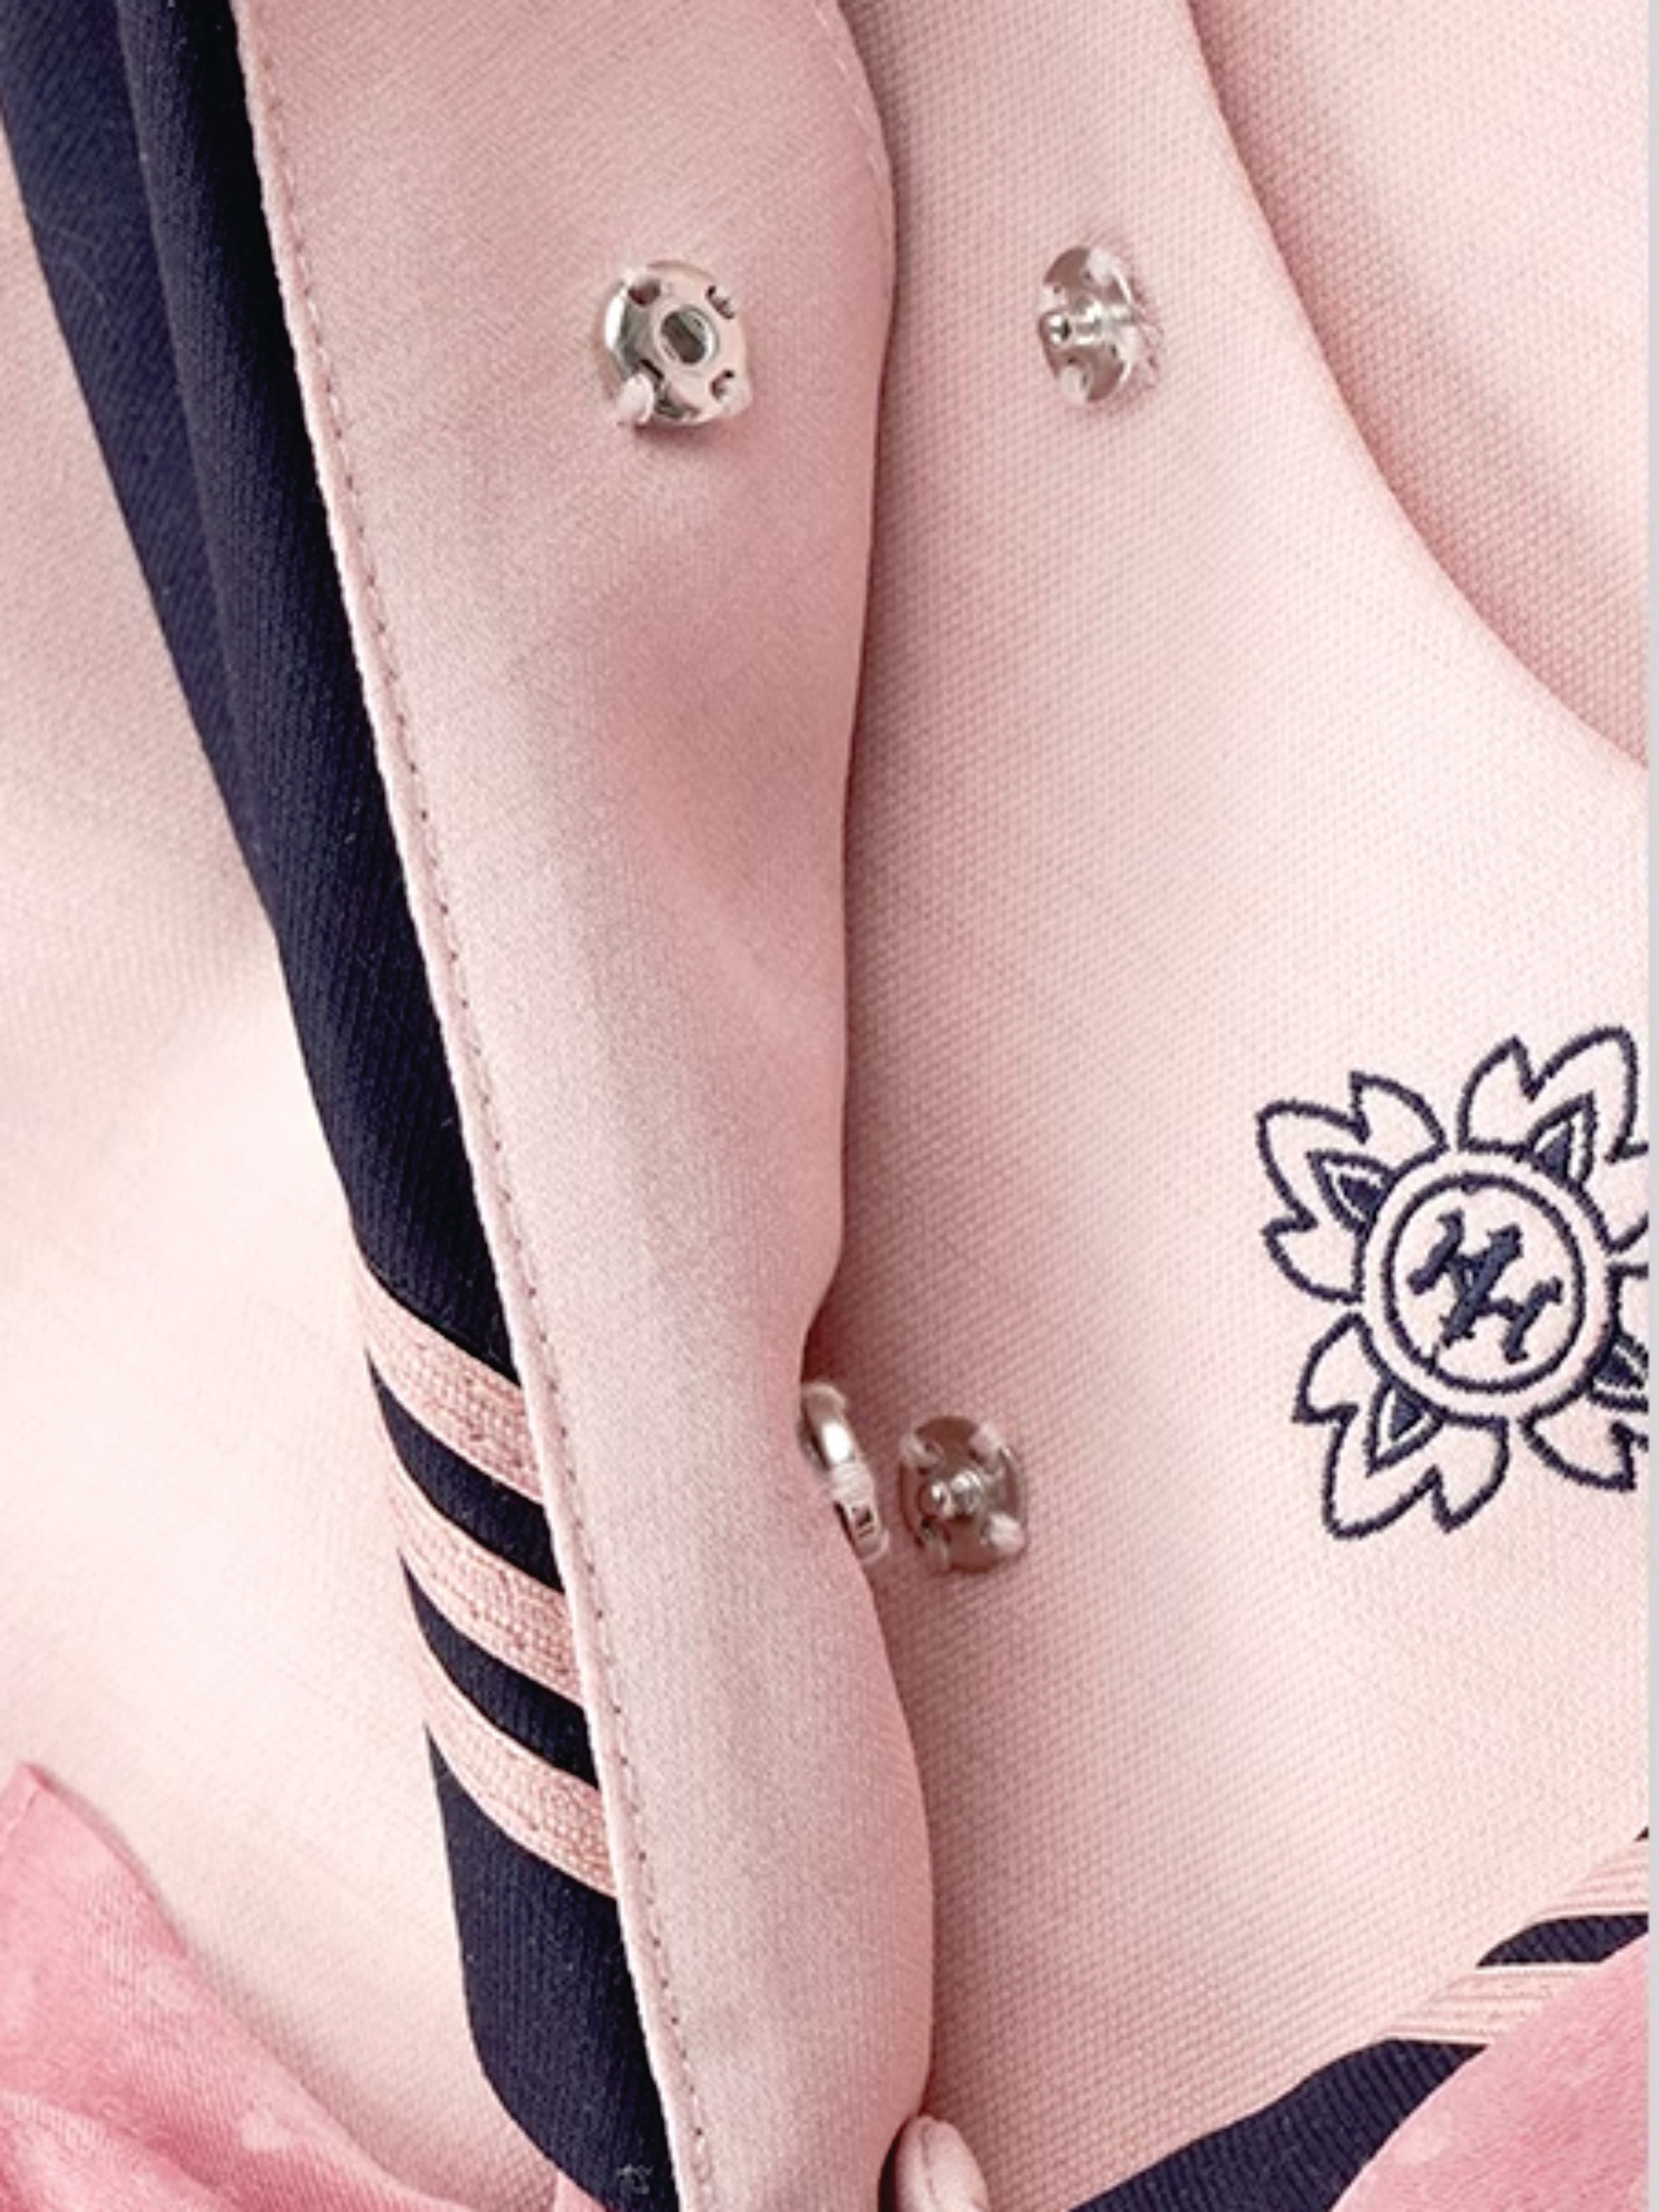 Sakura Petals Japanese Sailor Collar Short-sleeved JK Uniform Blouse-ntbhshop